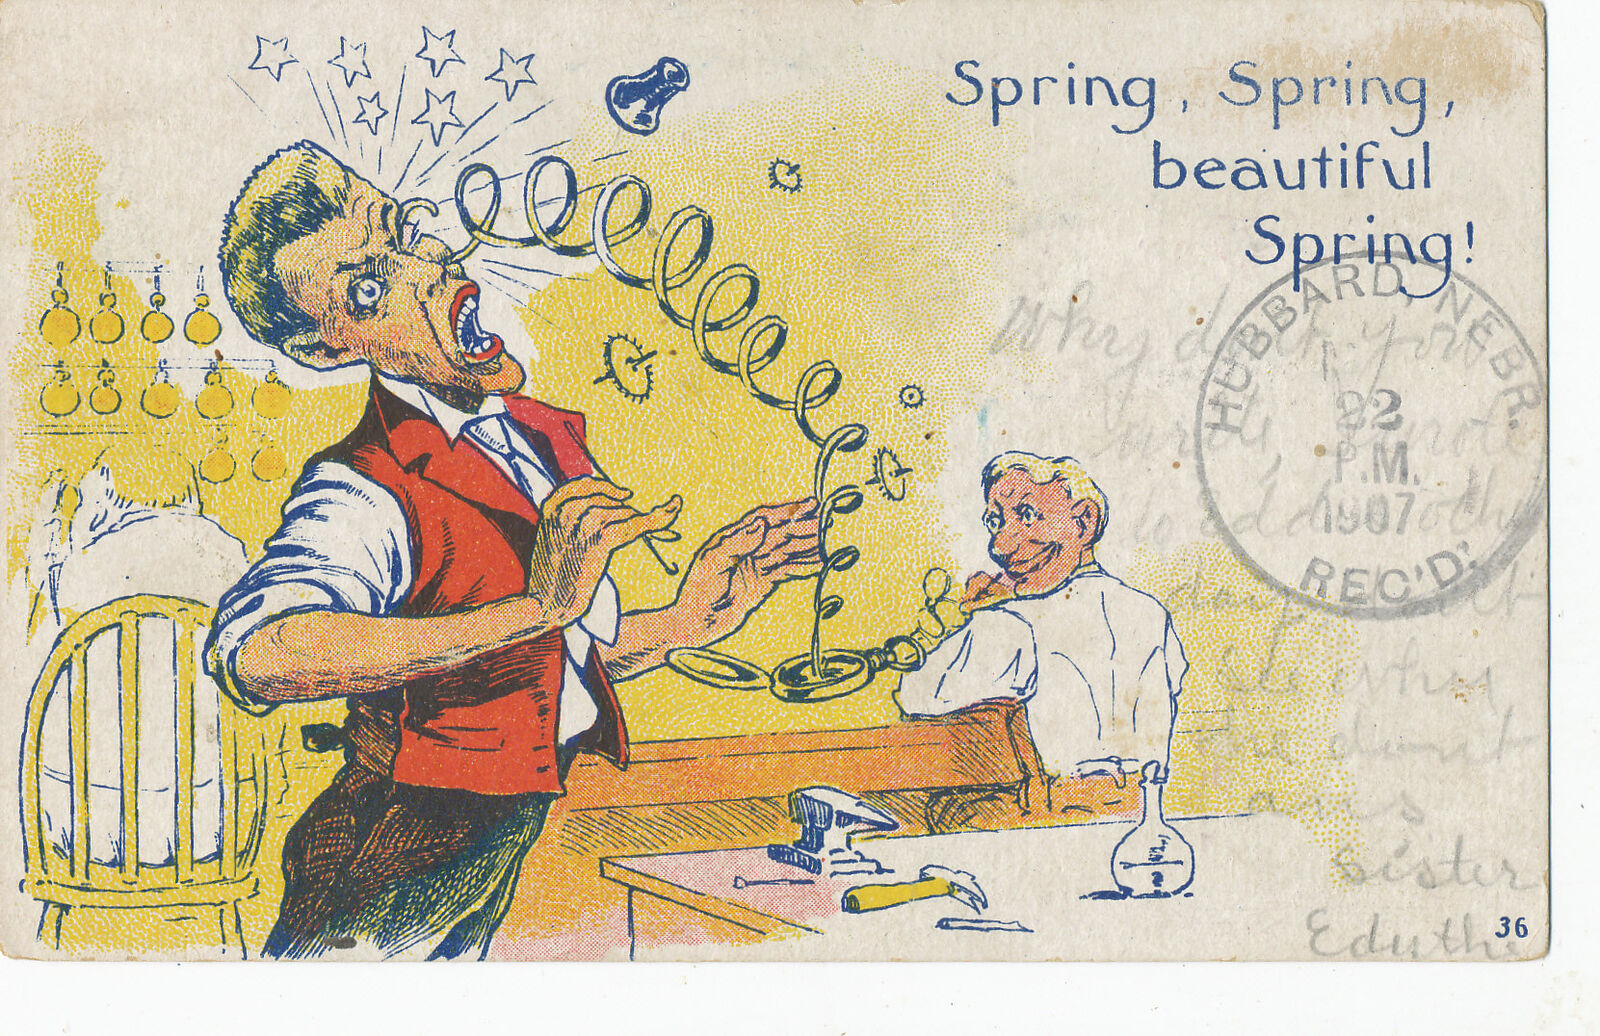 COMIC Jeweler watch spring hit in eye + 5/21/1907 RPO cancel on postcard